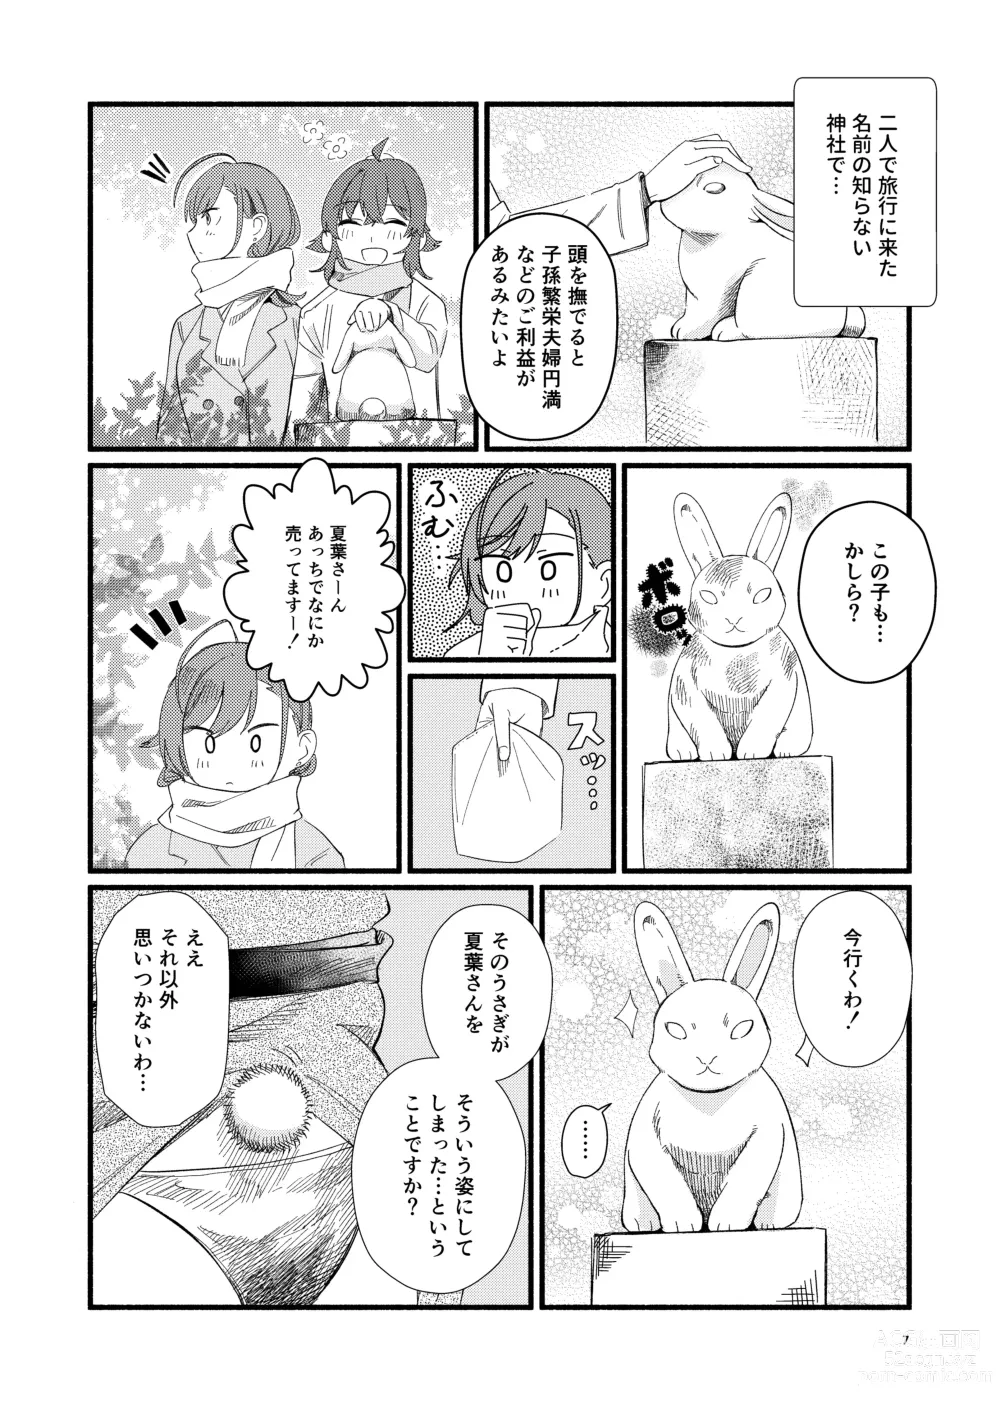 Page 7 of doujinshi Usagi no Ongaeshi